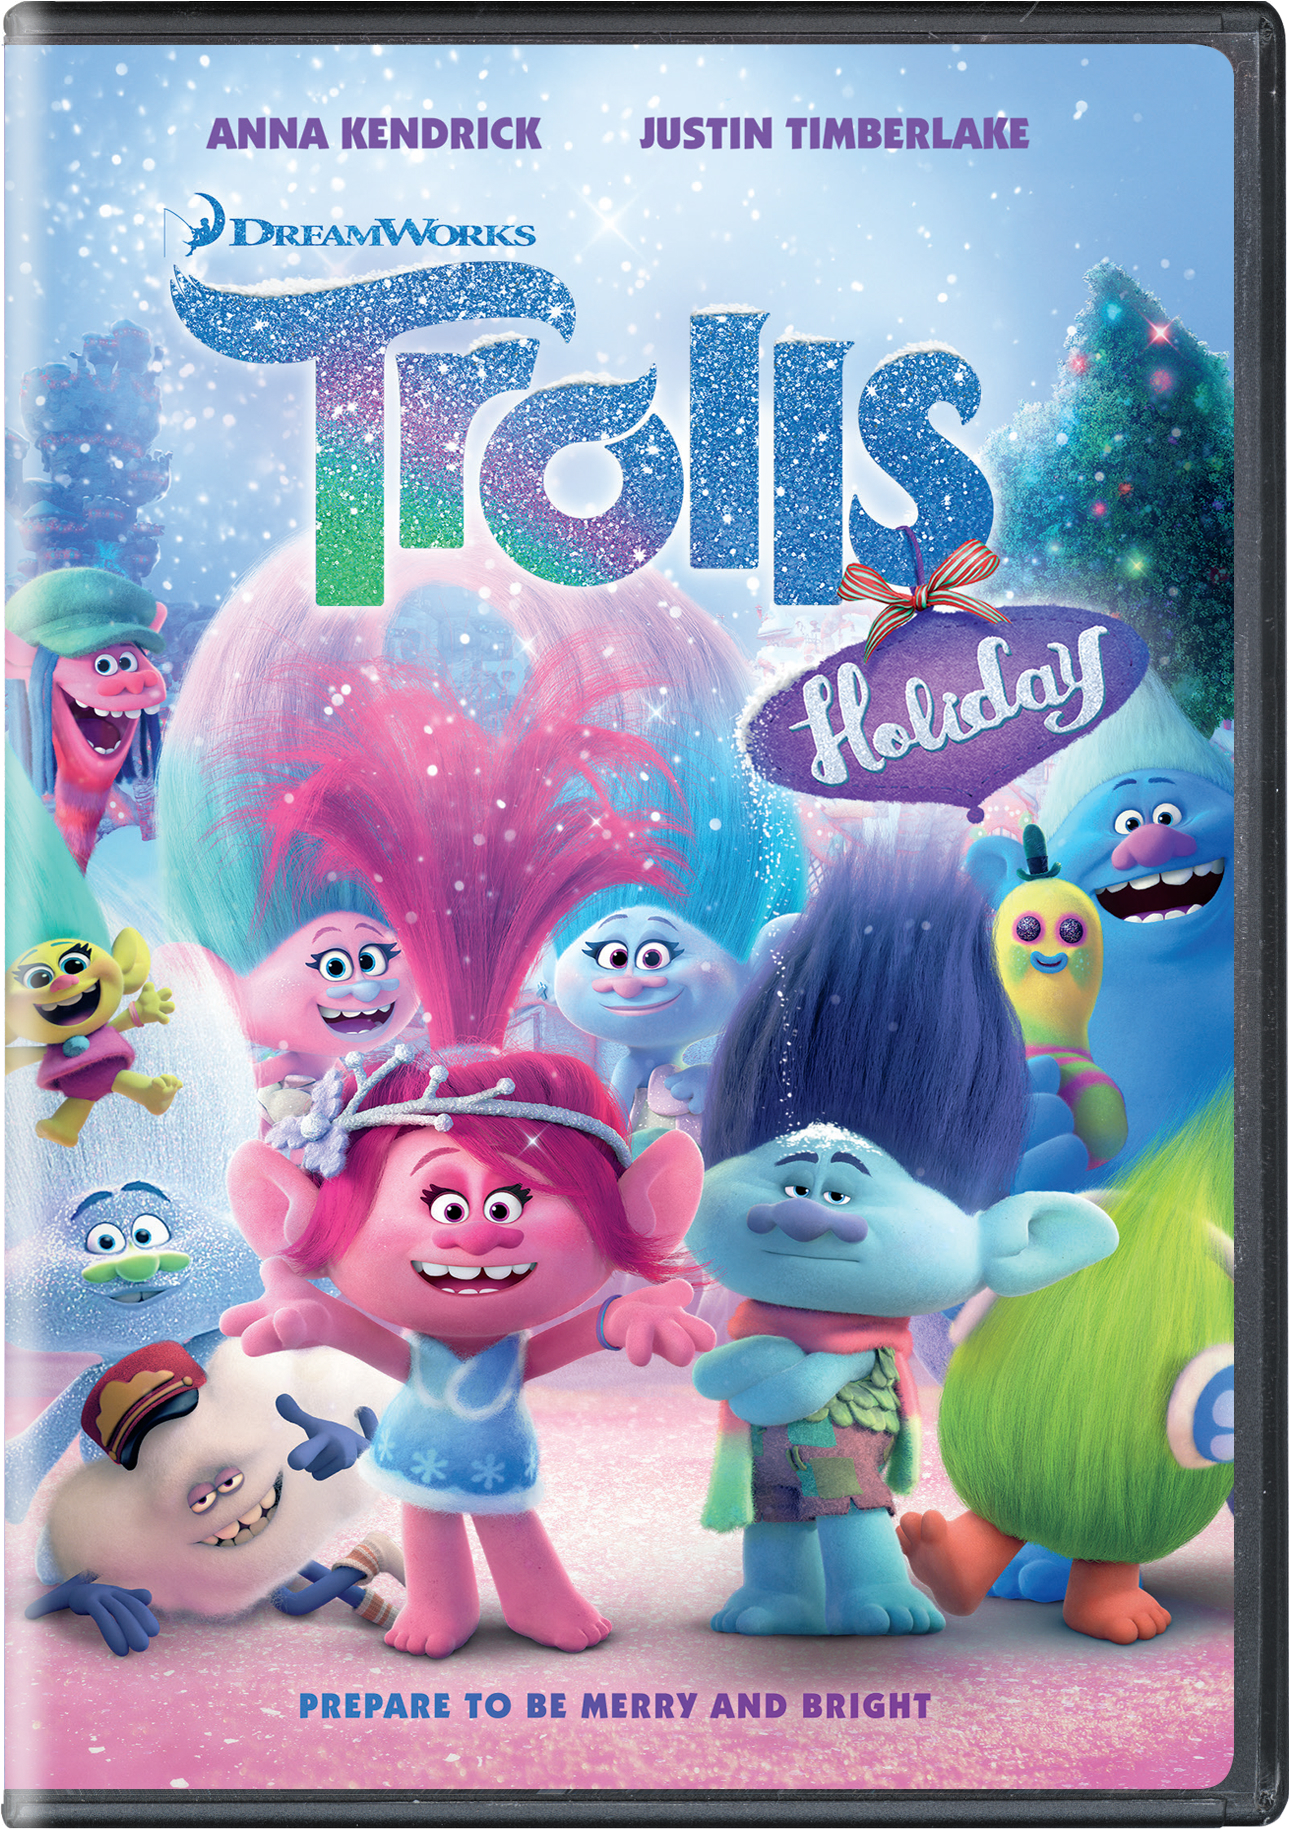 Trolls: Holiday - DVD [ 2017 ]  - Children Movies On DVD - Movies On GRUV